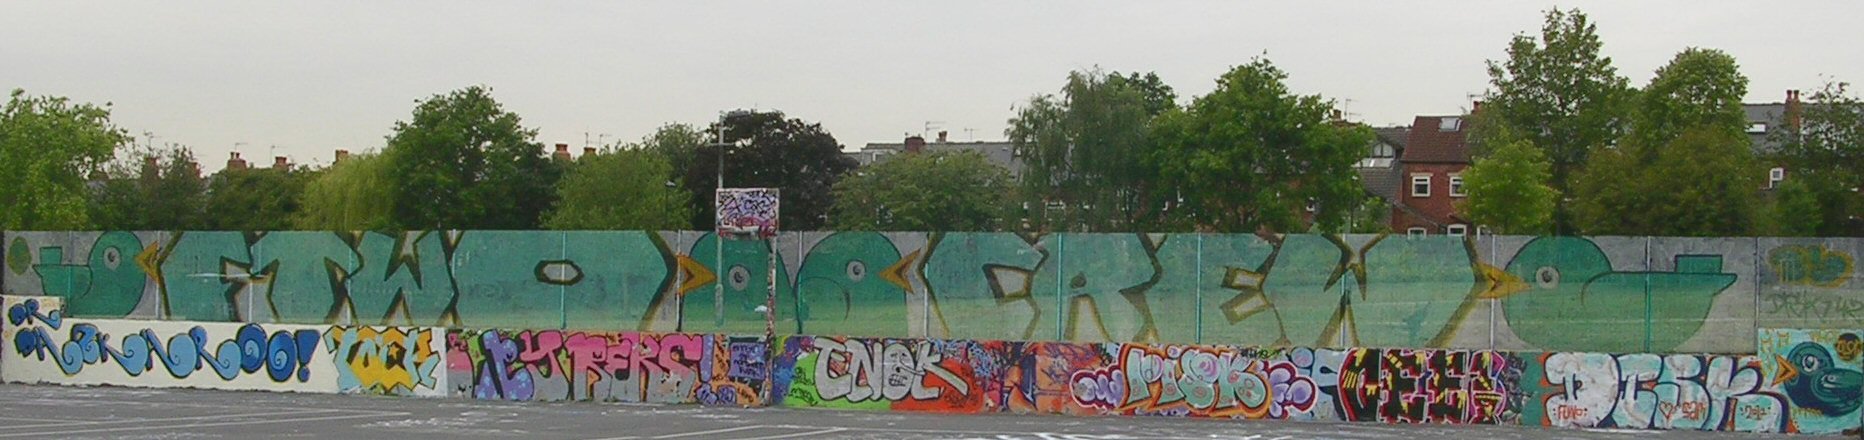 Wall 2 Sharrow Festival 2011